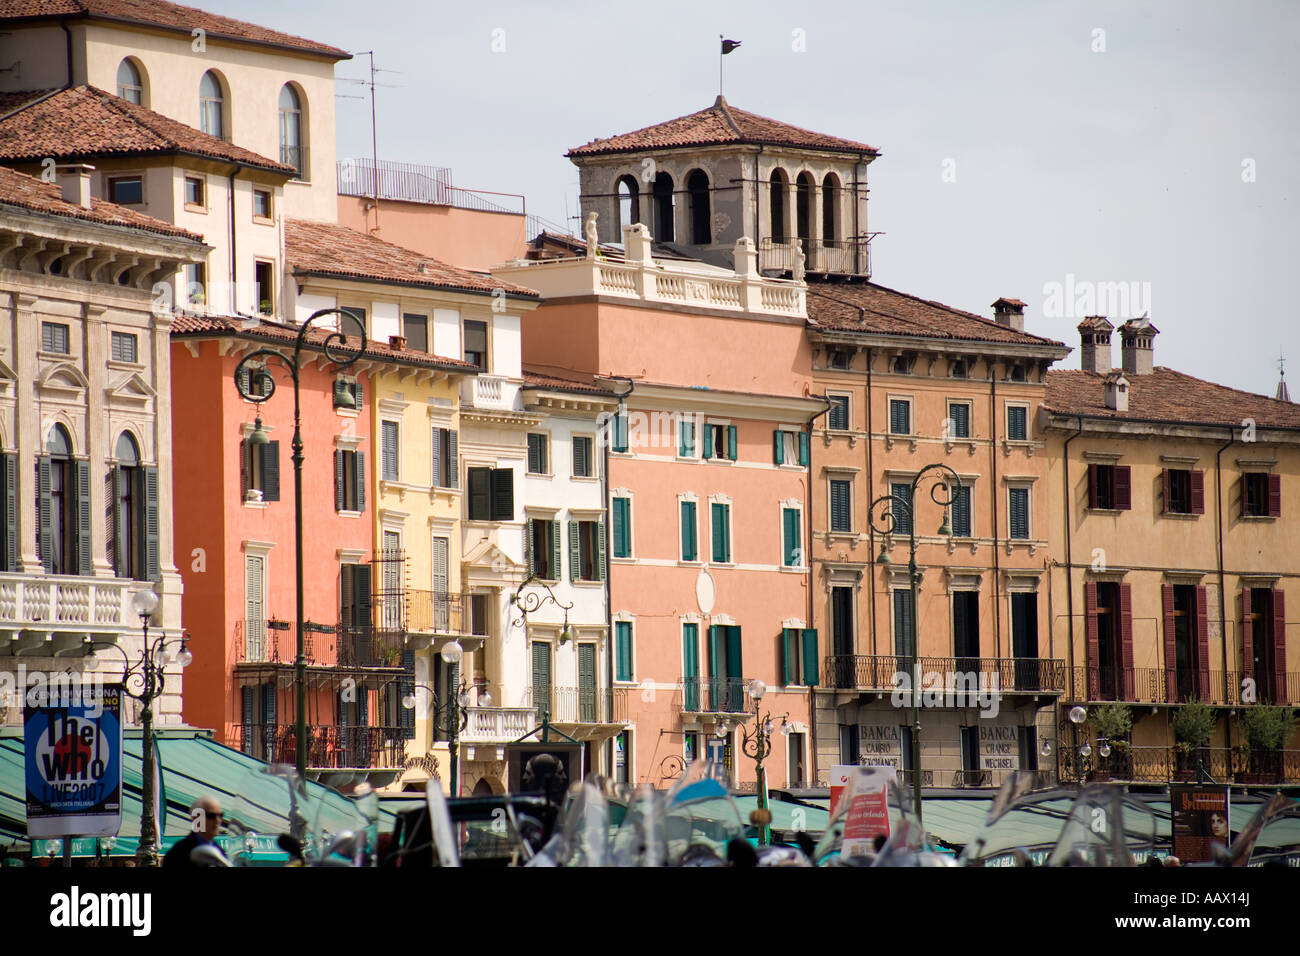 The colourful facades of Piazza Bra Verona Italy Stock Photo